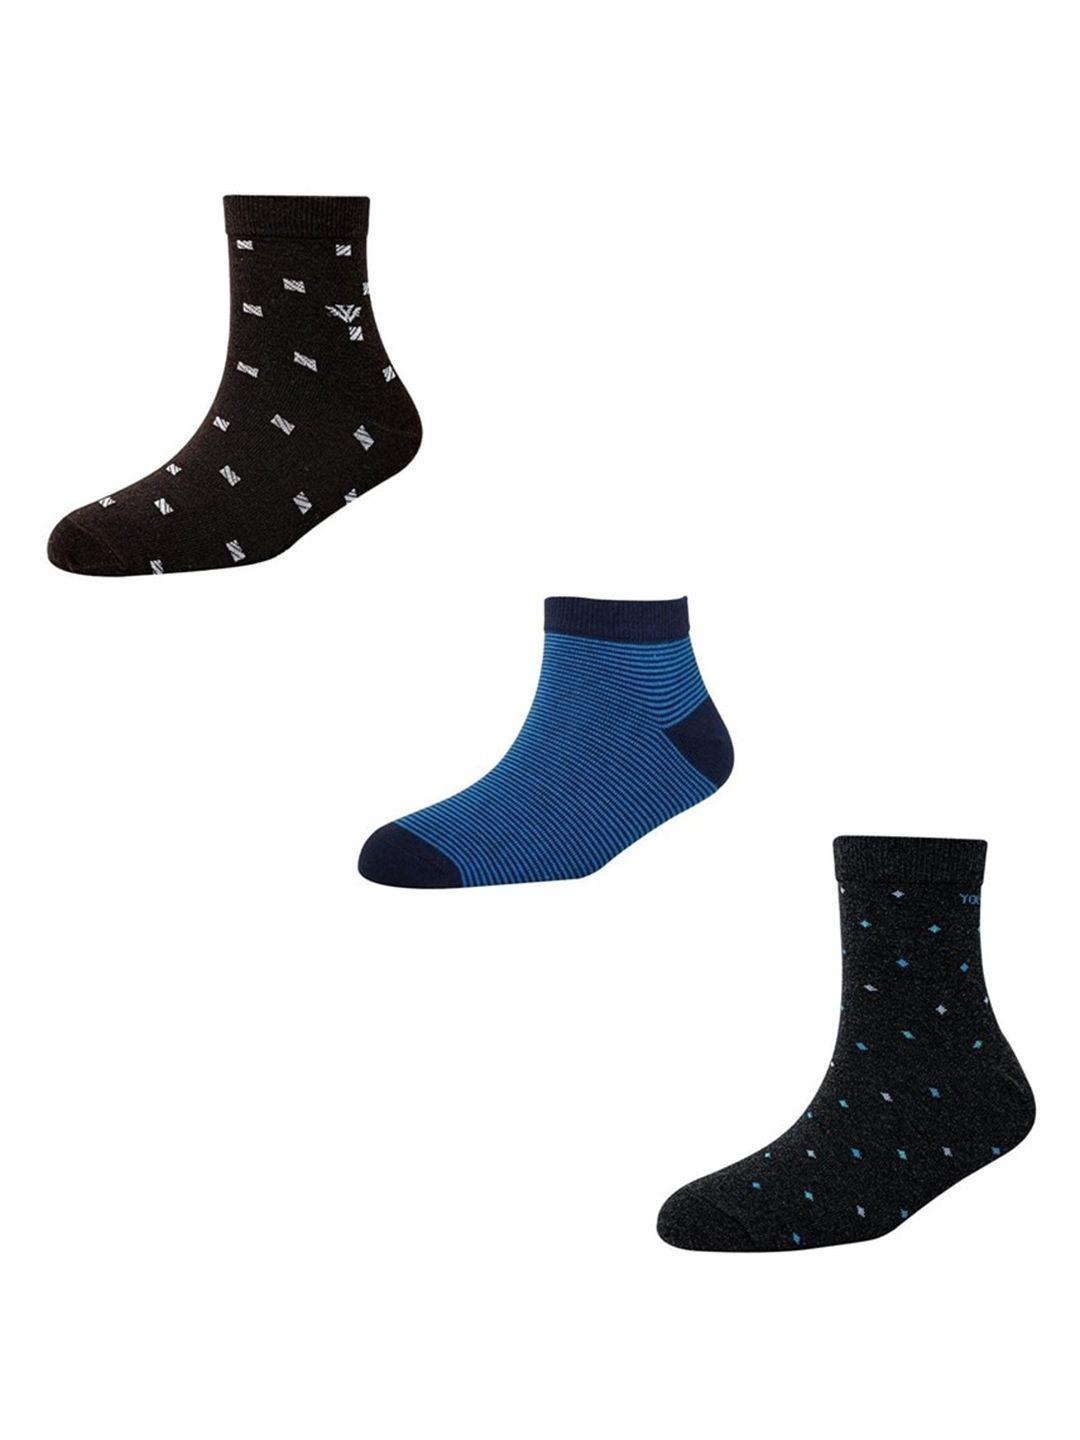 cotstyle men pack of 3 patterned ankle-length socks